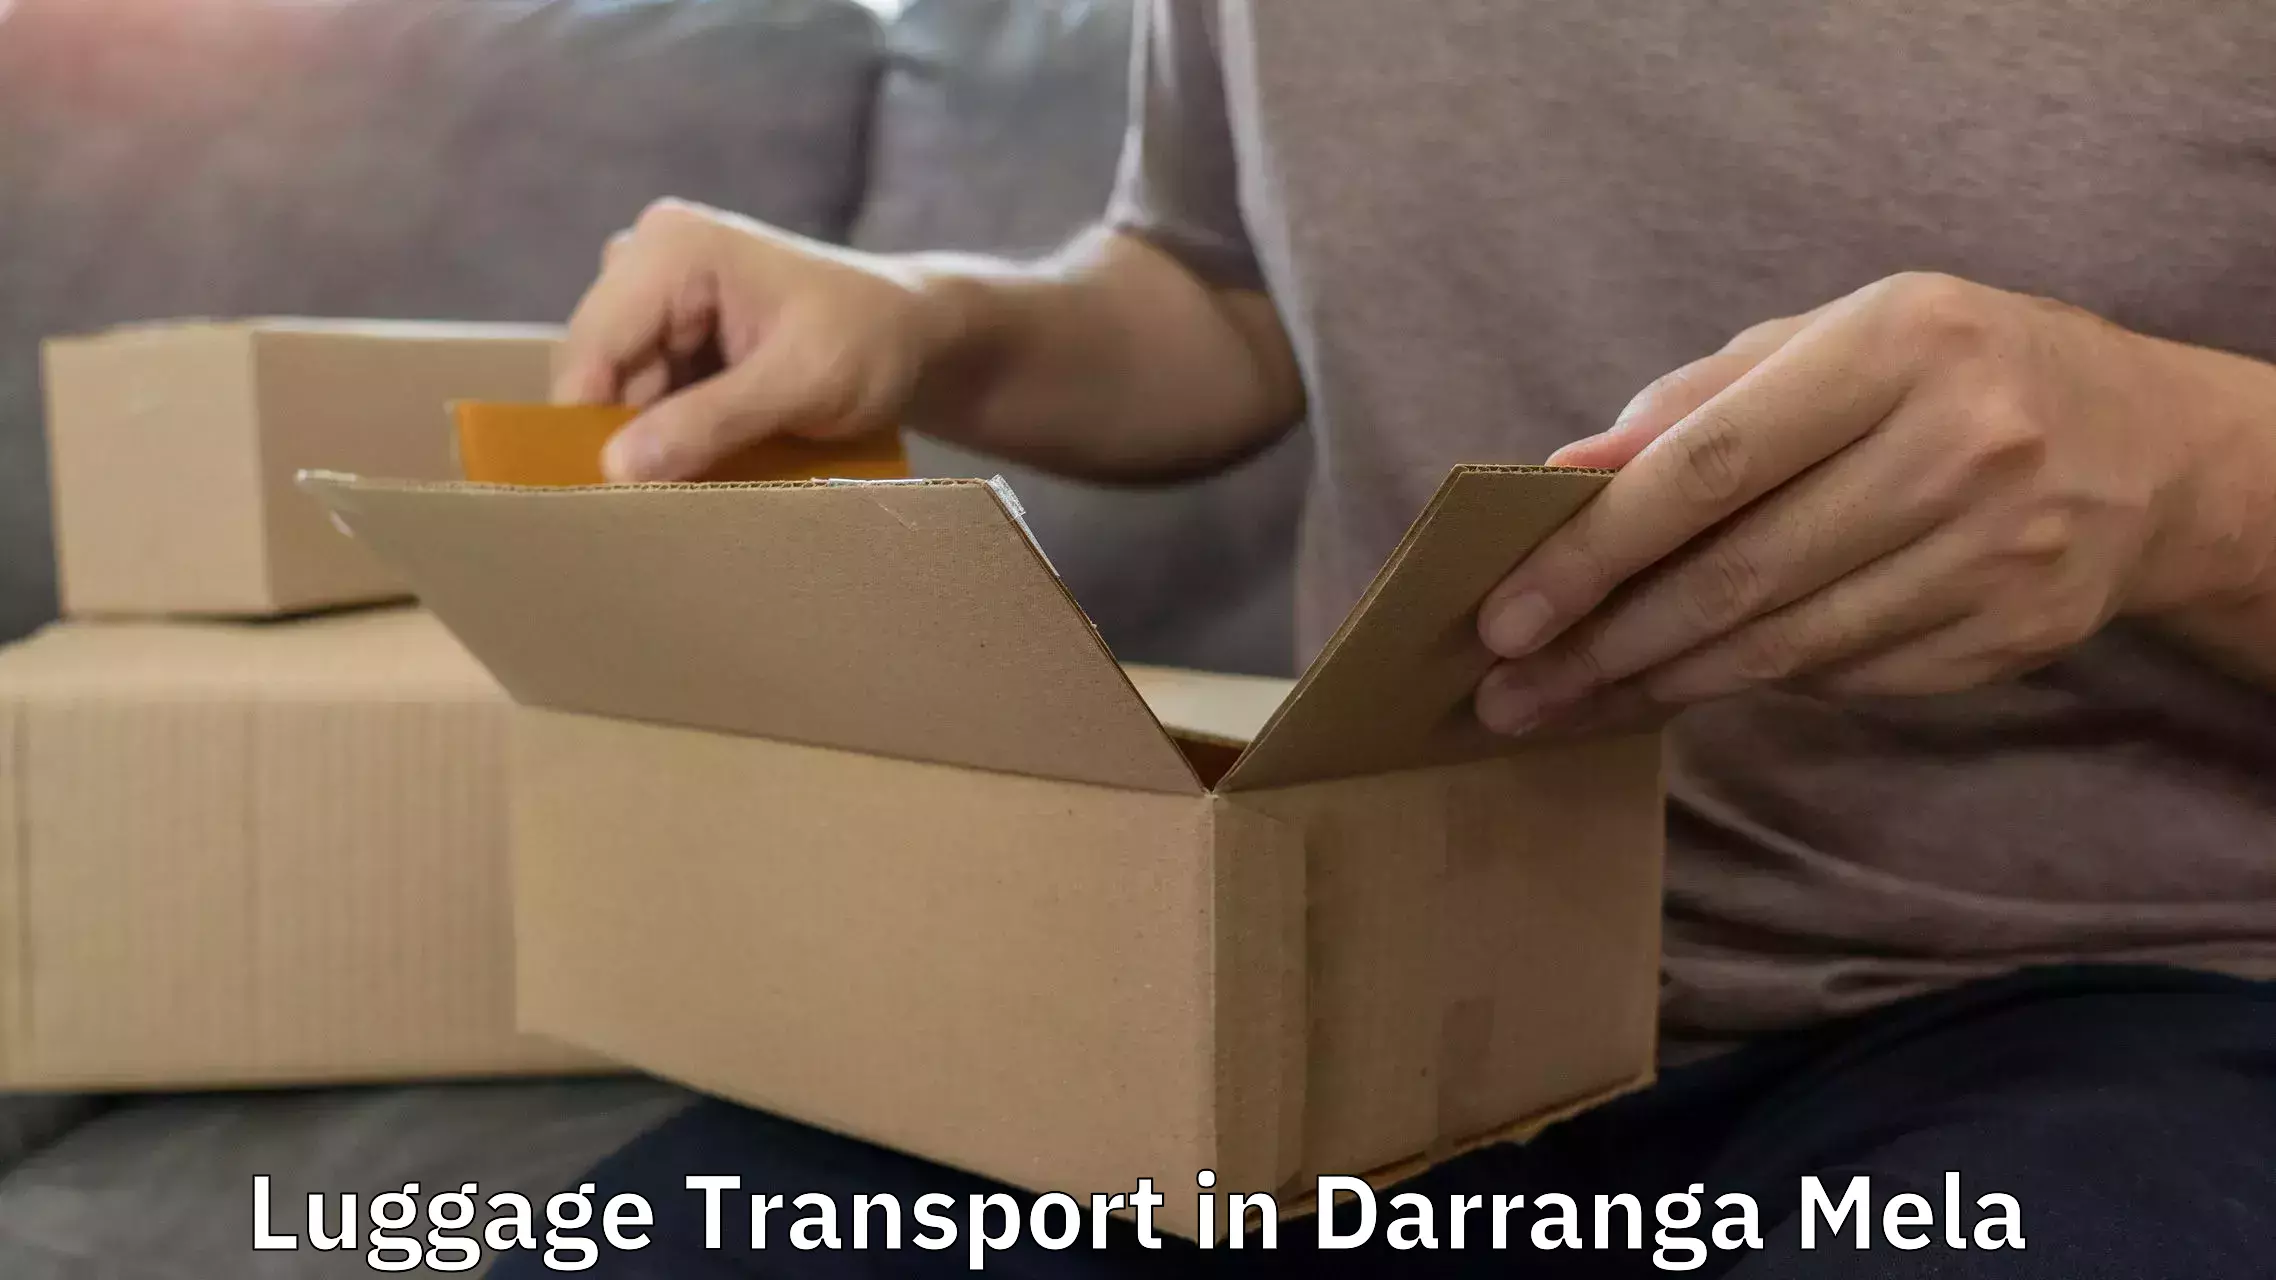 Hotel to Door baggage transport in Darranga Mela